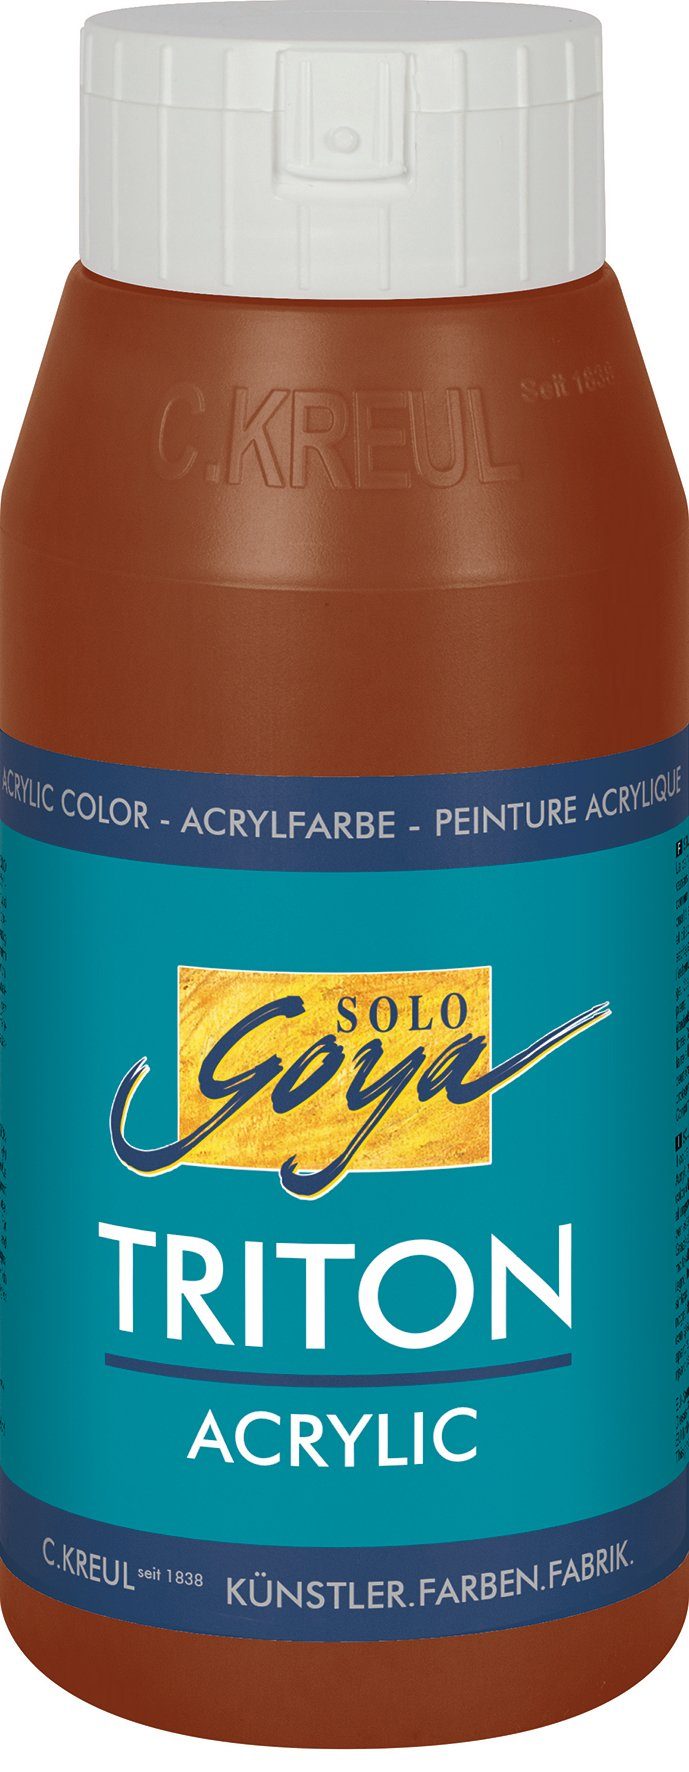 Kreul Acrylfarbe Solo Goya Triton Acrylic, 750 ml Oxydbraun-Dunkel